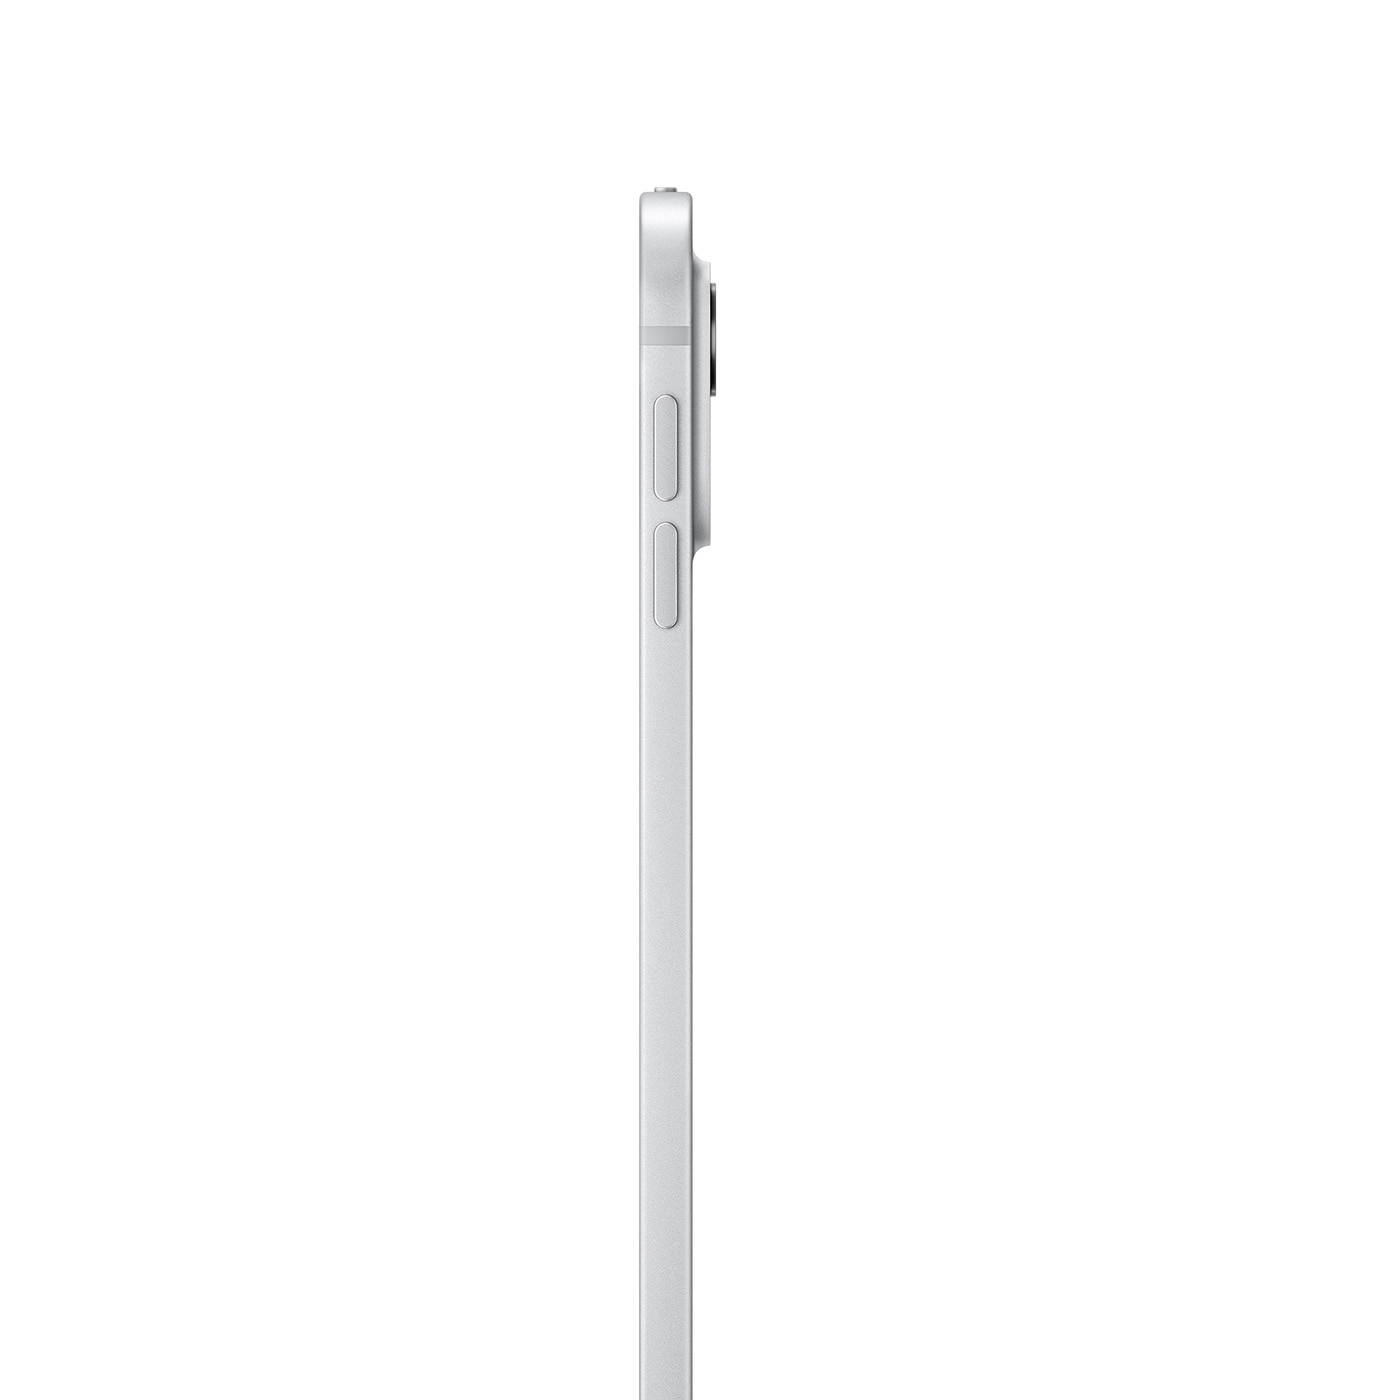 Apple 13 吋 iPad Pro Wi-Fi 256GB 配備標準玻璃 銀